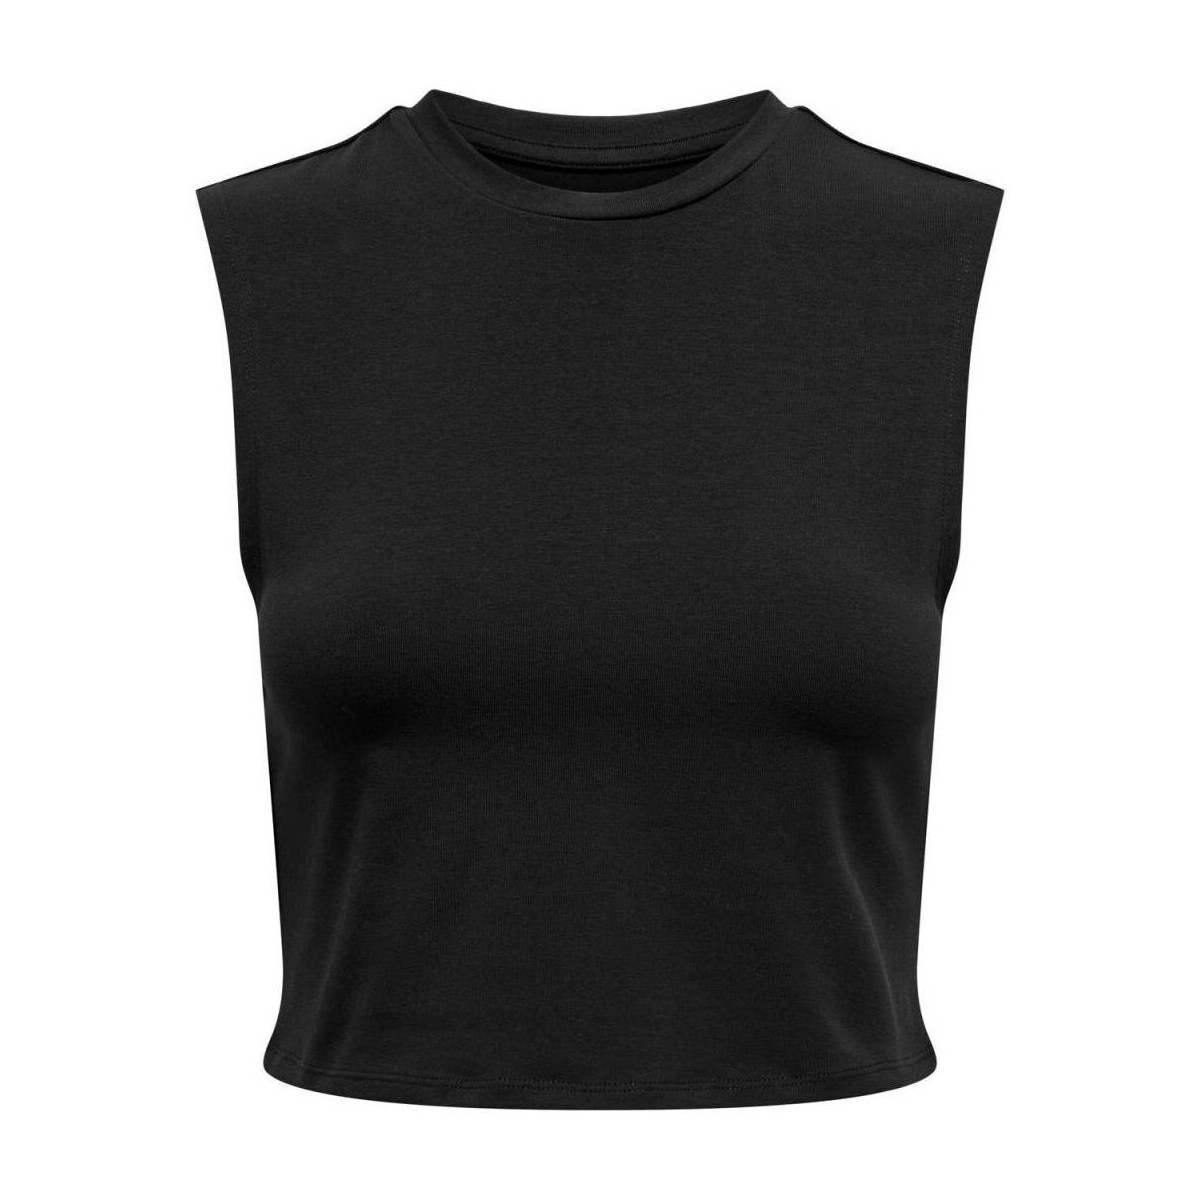 textil Mujer Camisetas sin mangas Only 15315376 CHOICE-BLACK Negro